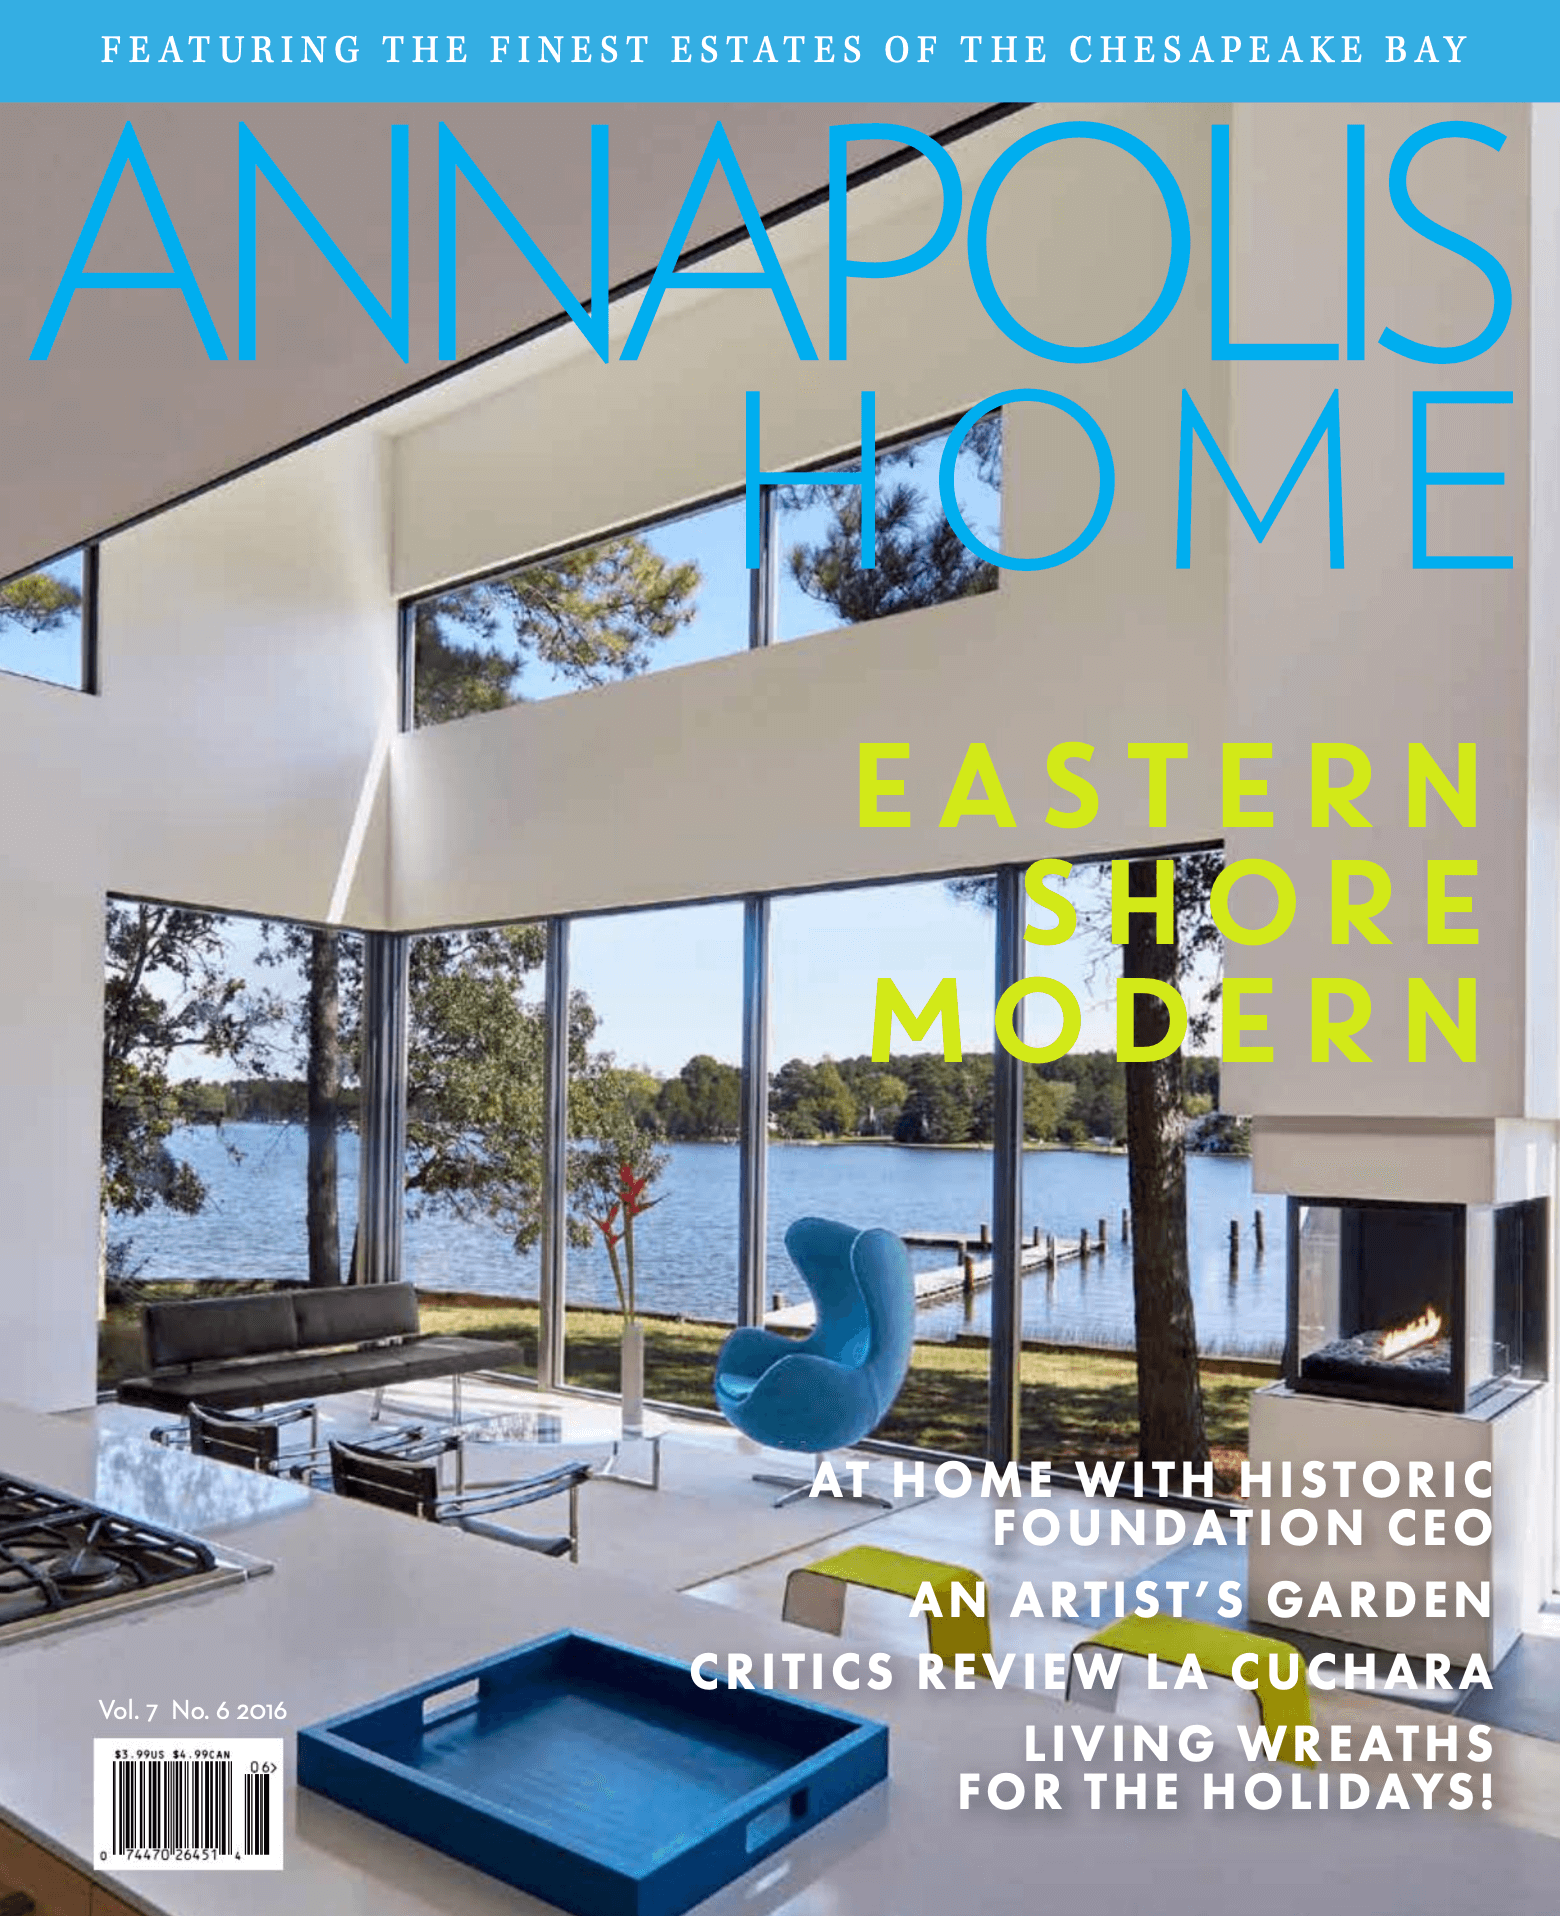 Annapolis Home Magazine Vol 7 No 6 2016 Cover